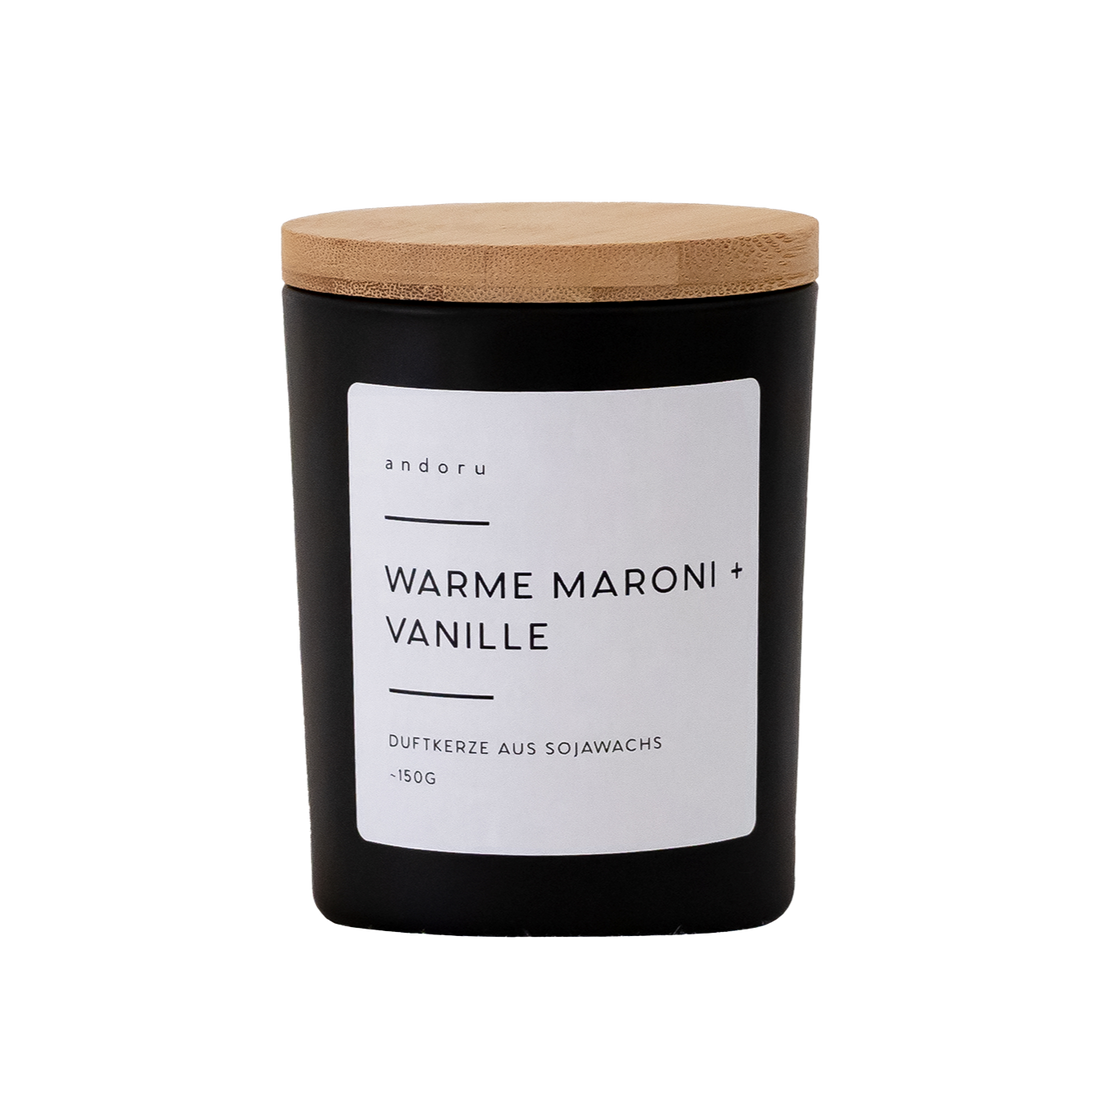 Warme Maroni + Vanille - andoru duftkerze sojawachs raumduft produktbild